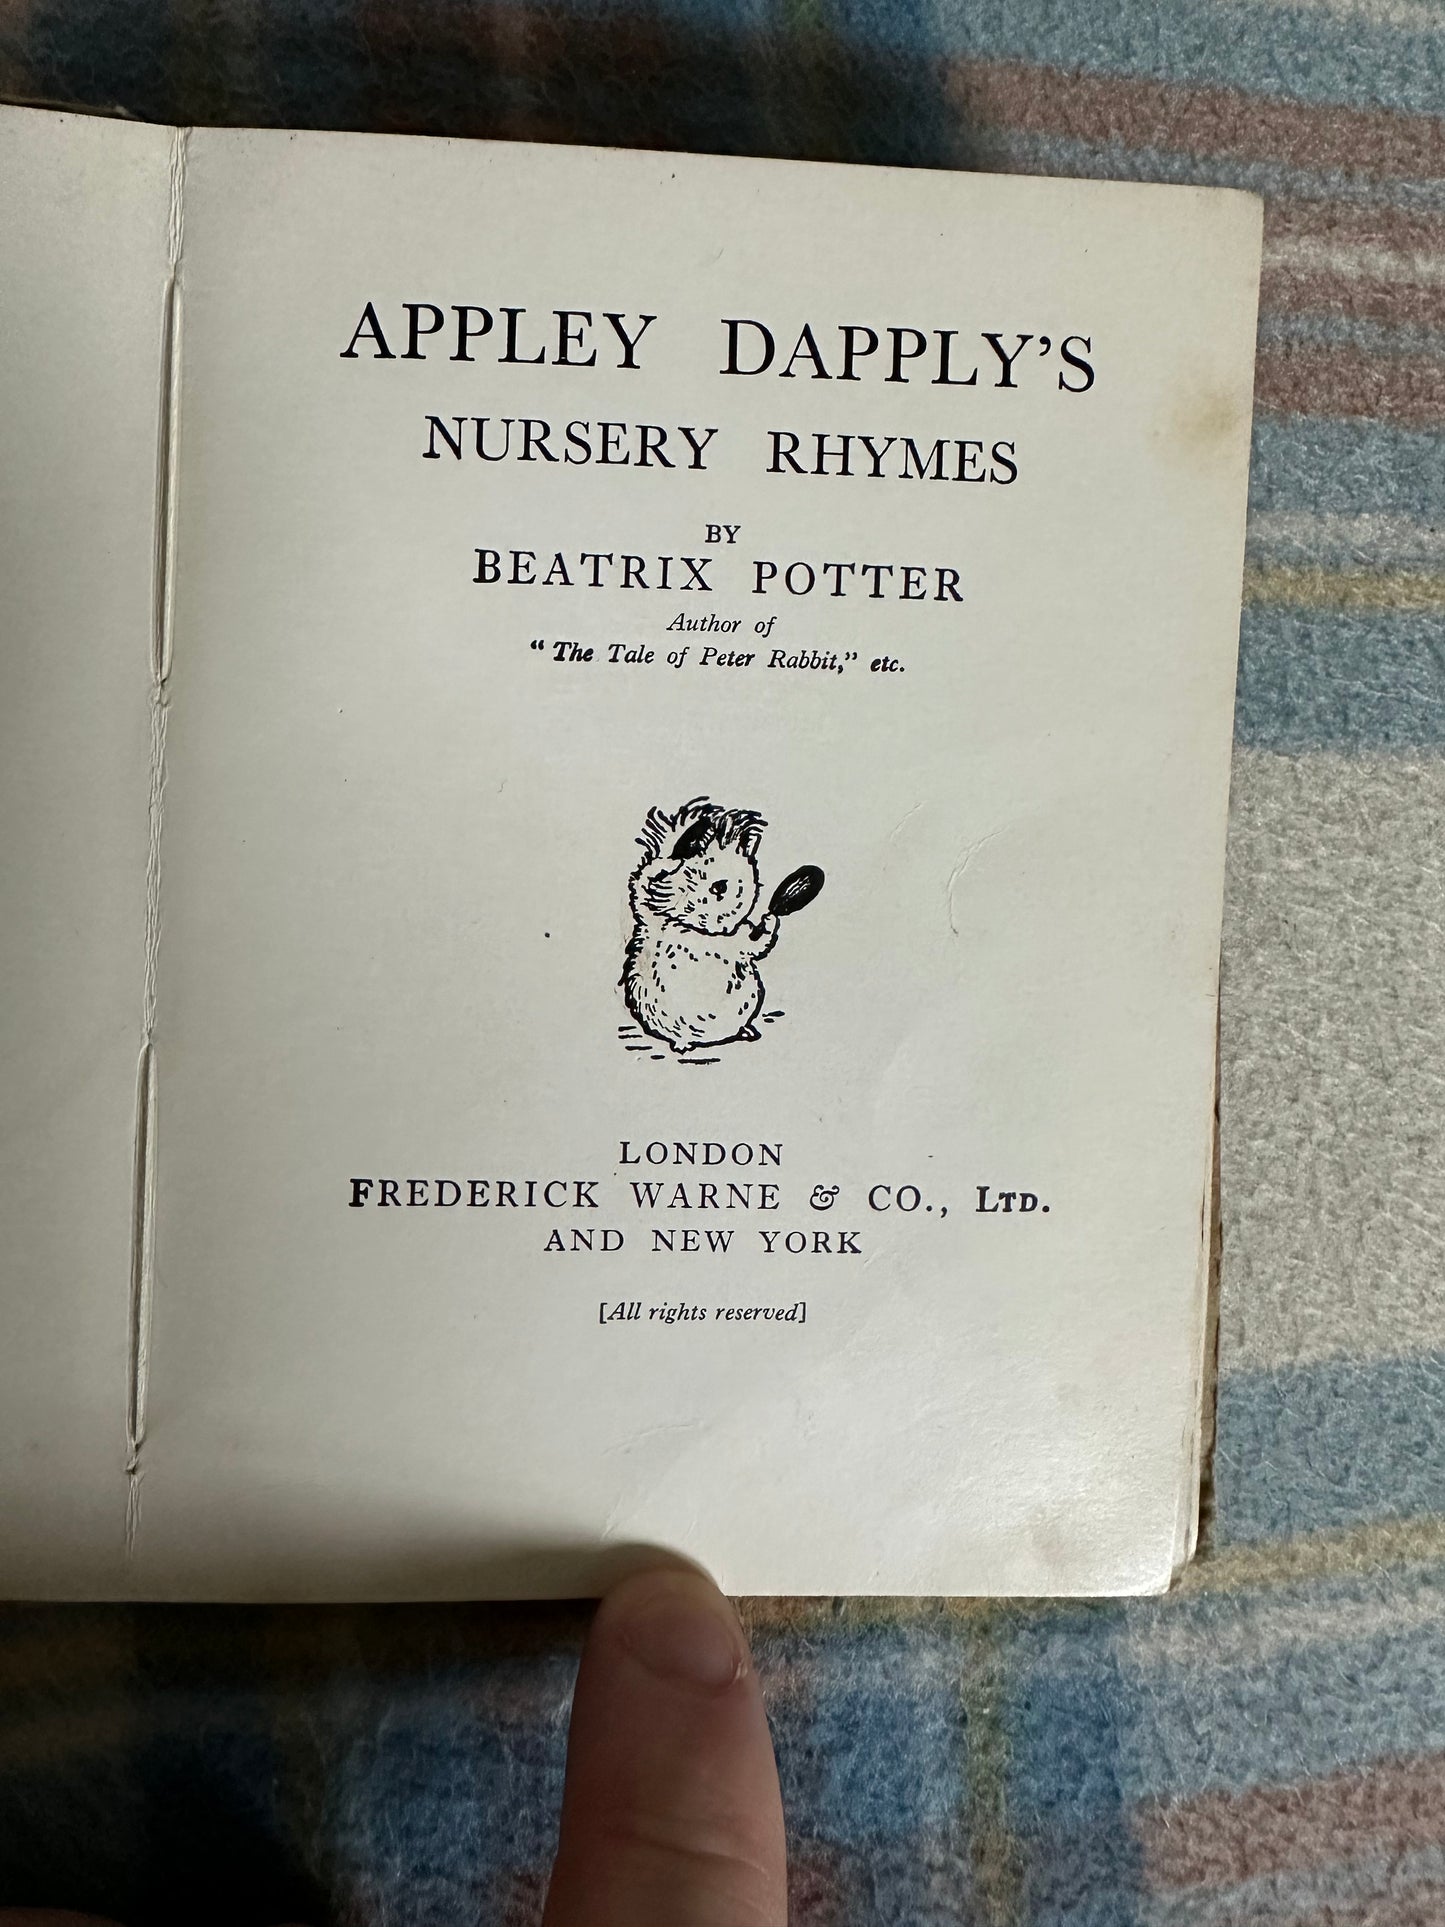 1968 Appley Dapply’s Nursery Rhymes - Beatrix Potter(Frederick Warne & Co Ltd)